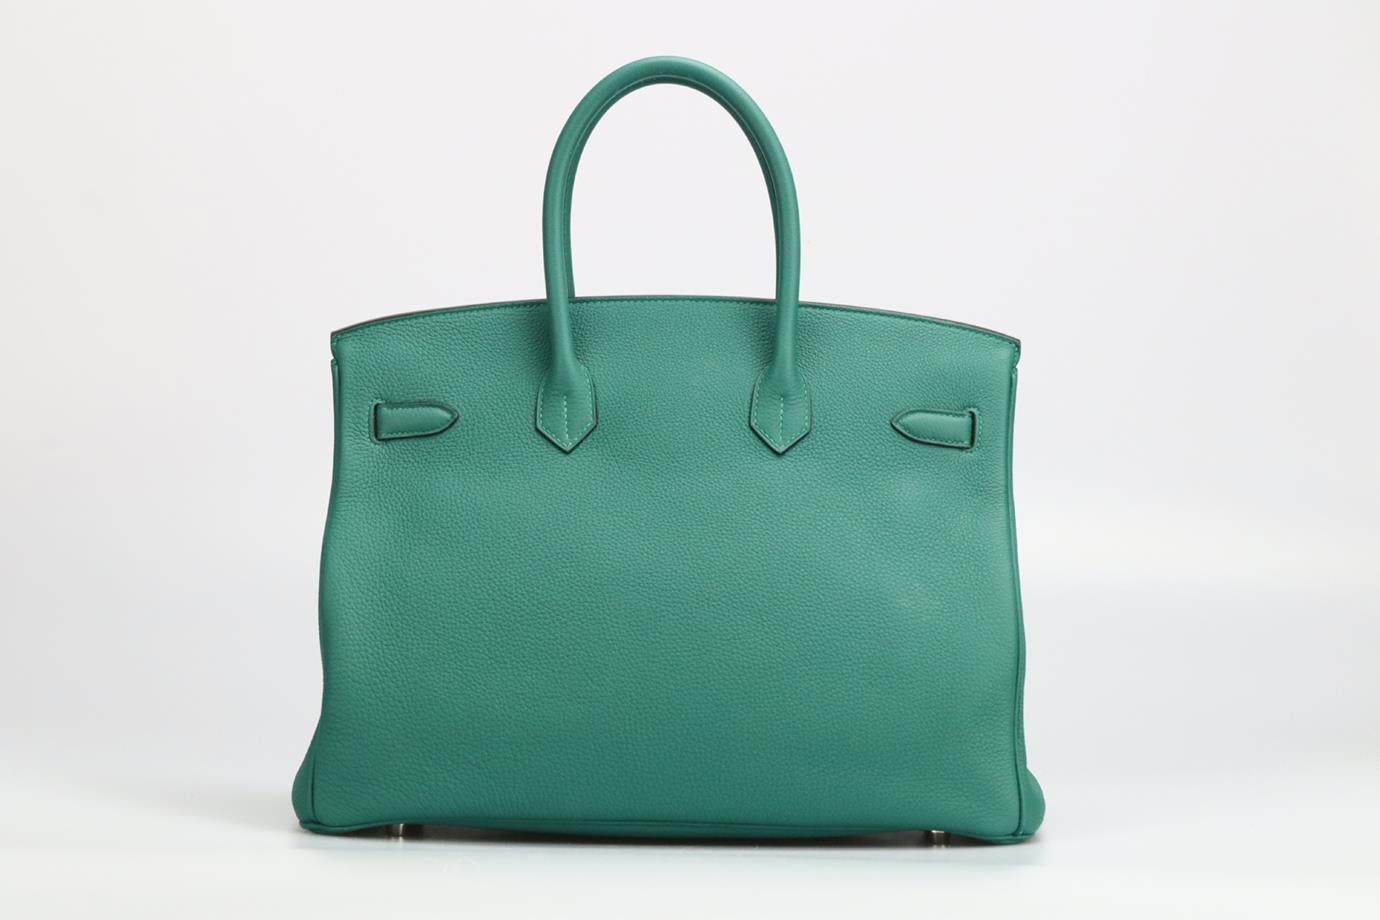 Hermès 2013 Birkin 35cm Maurice Leather Bag For Sale 2